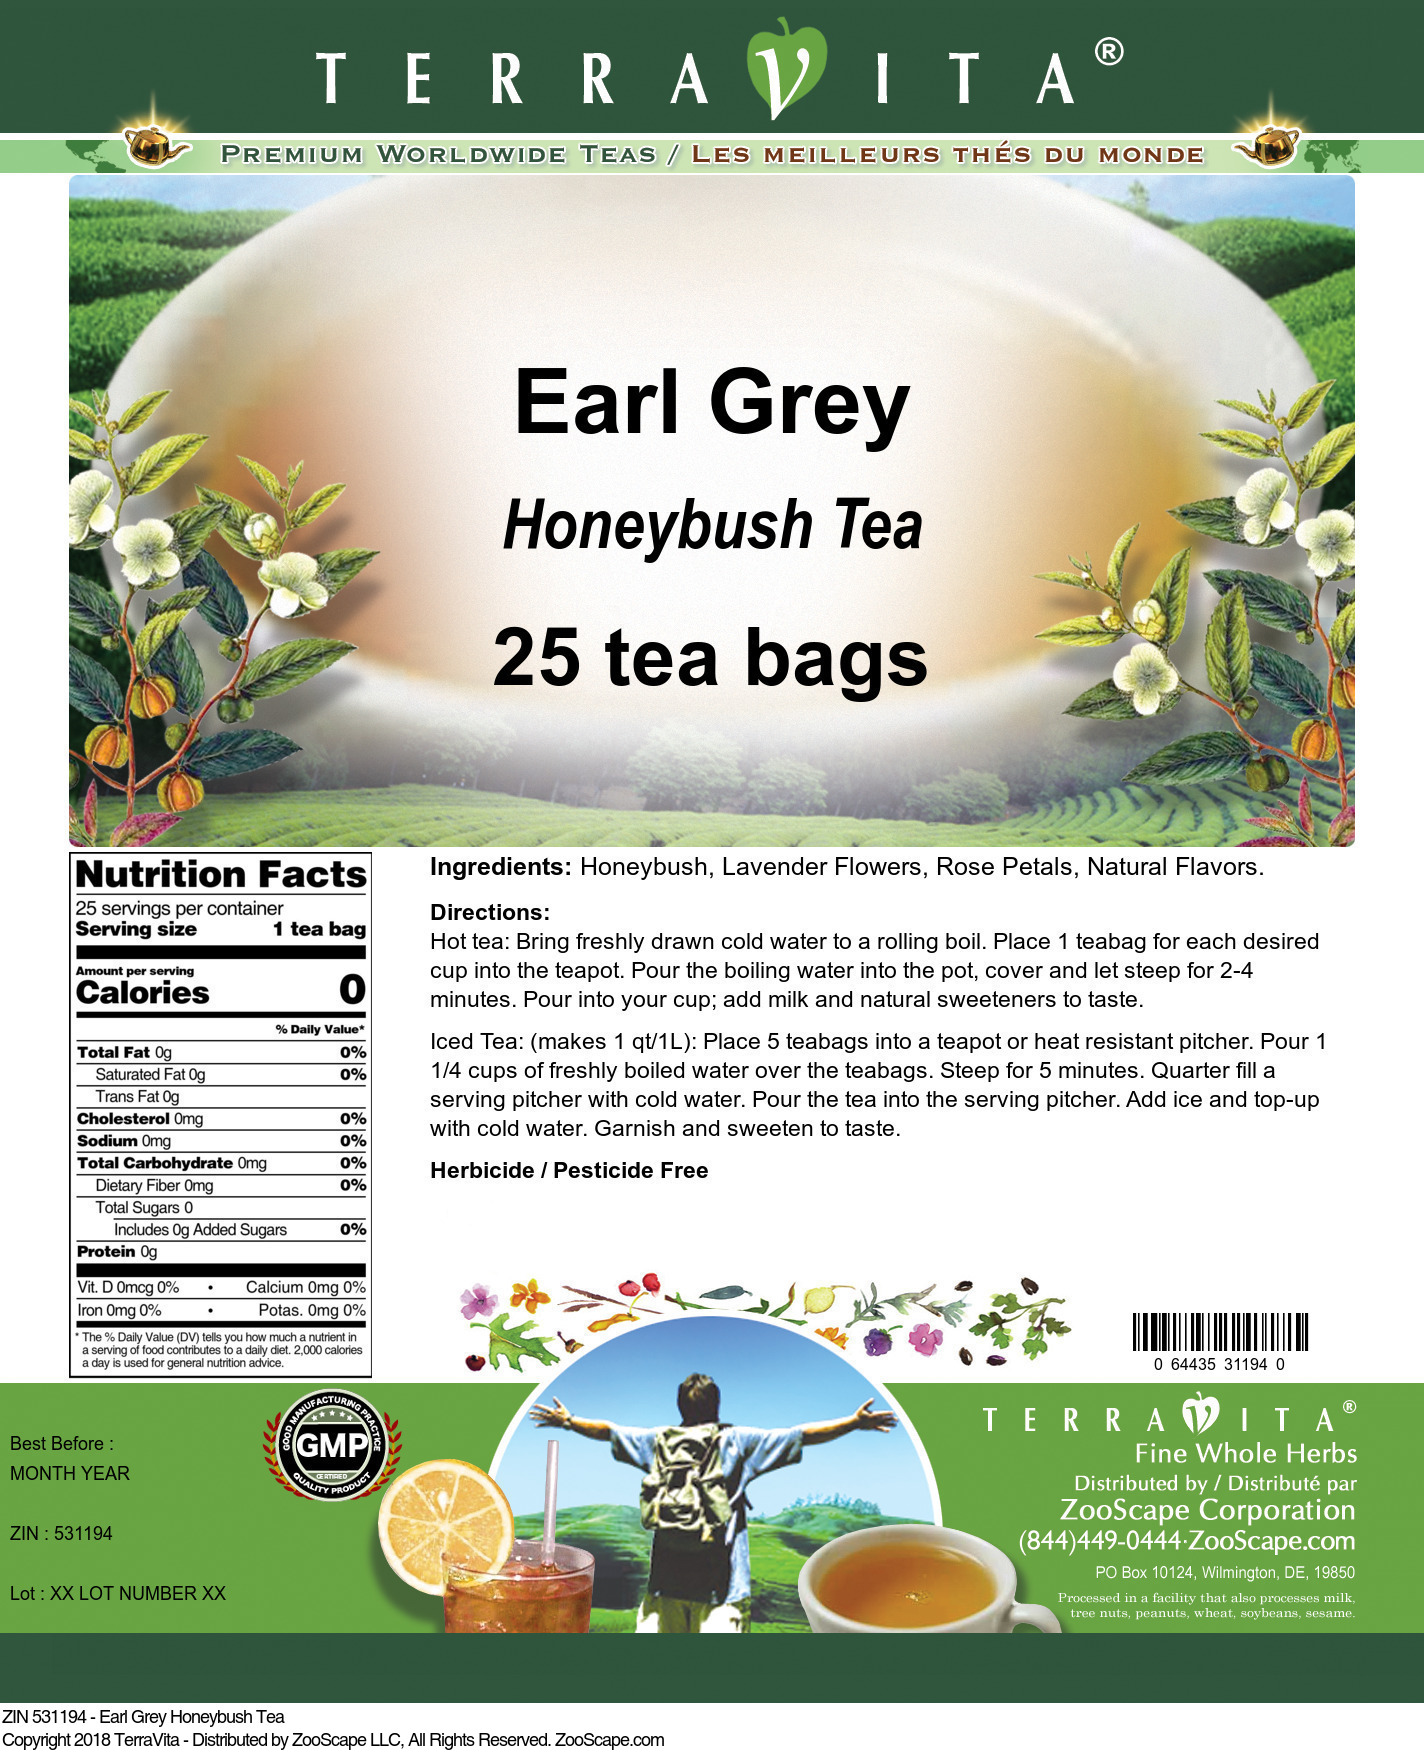 Earl Grey Honeybush Tea - Label